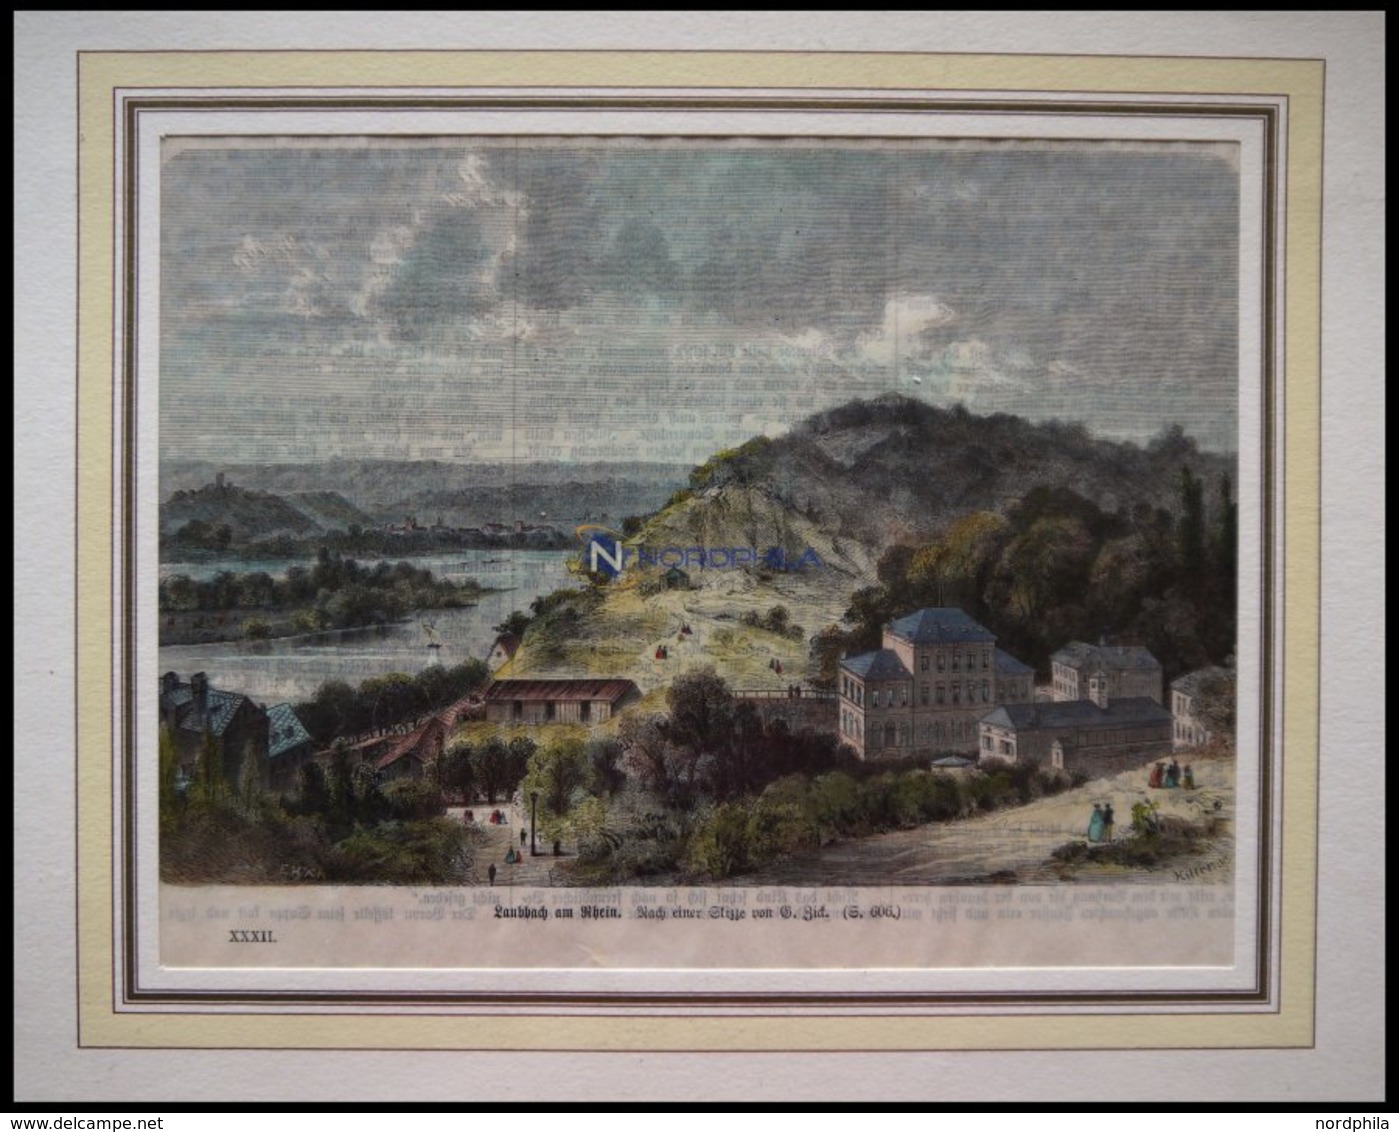 LANDBACH A.RHEIN, Gesamtansicht, Kolorierter Holzstich Nach Zick Um 1880 - Lithographies